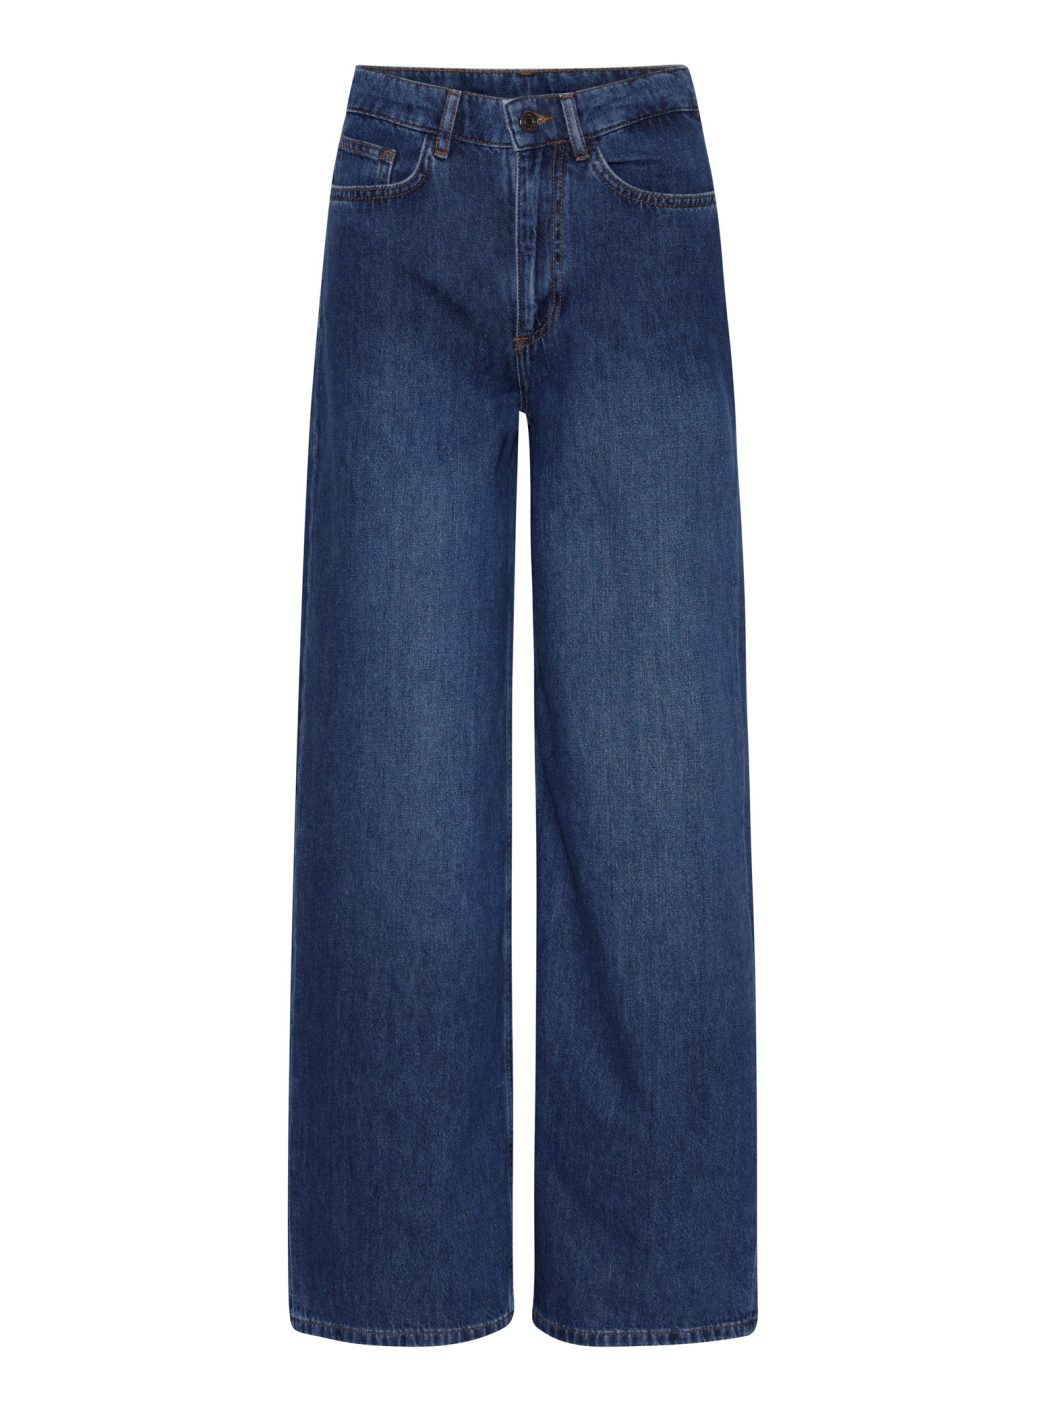 vanessa-bruno-bilbao-jeans-royal-1